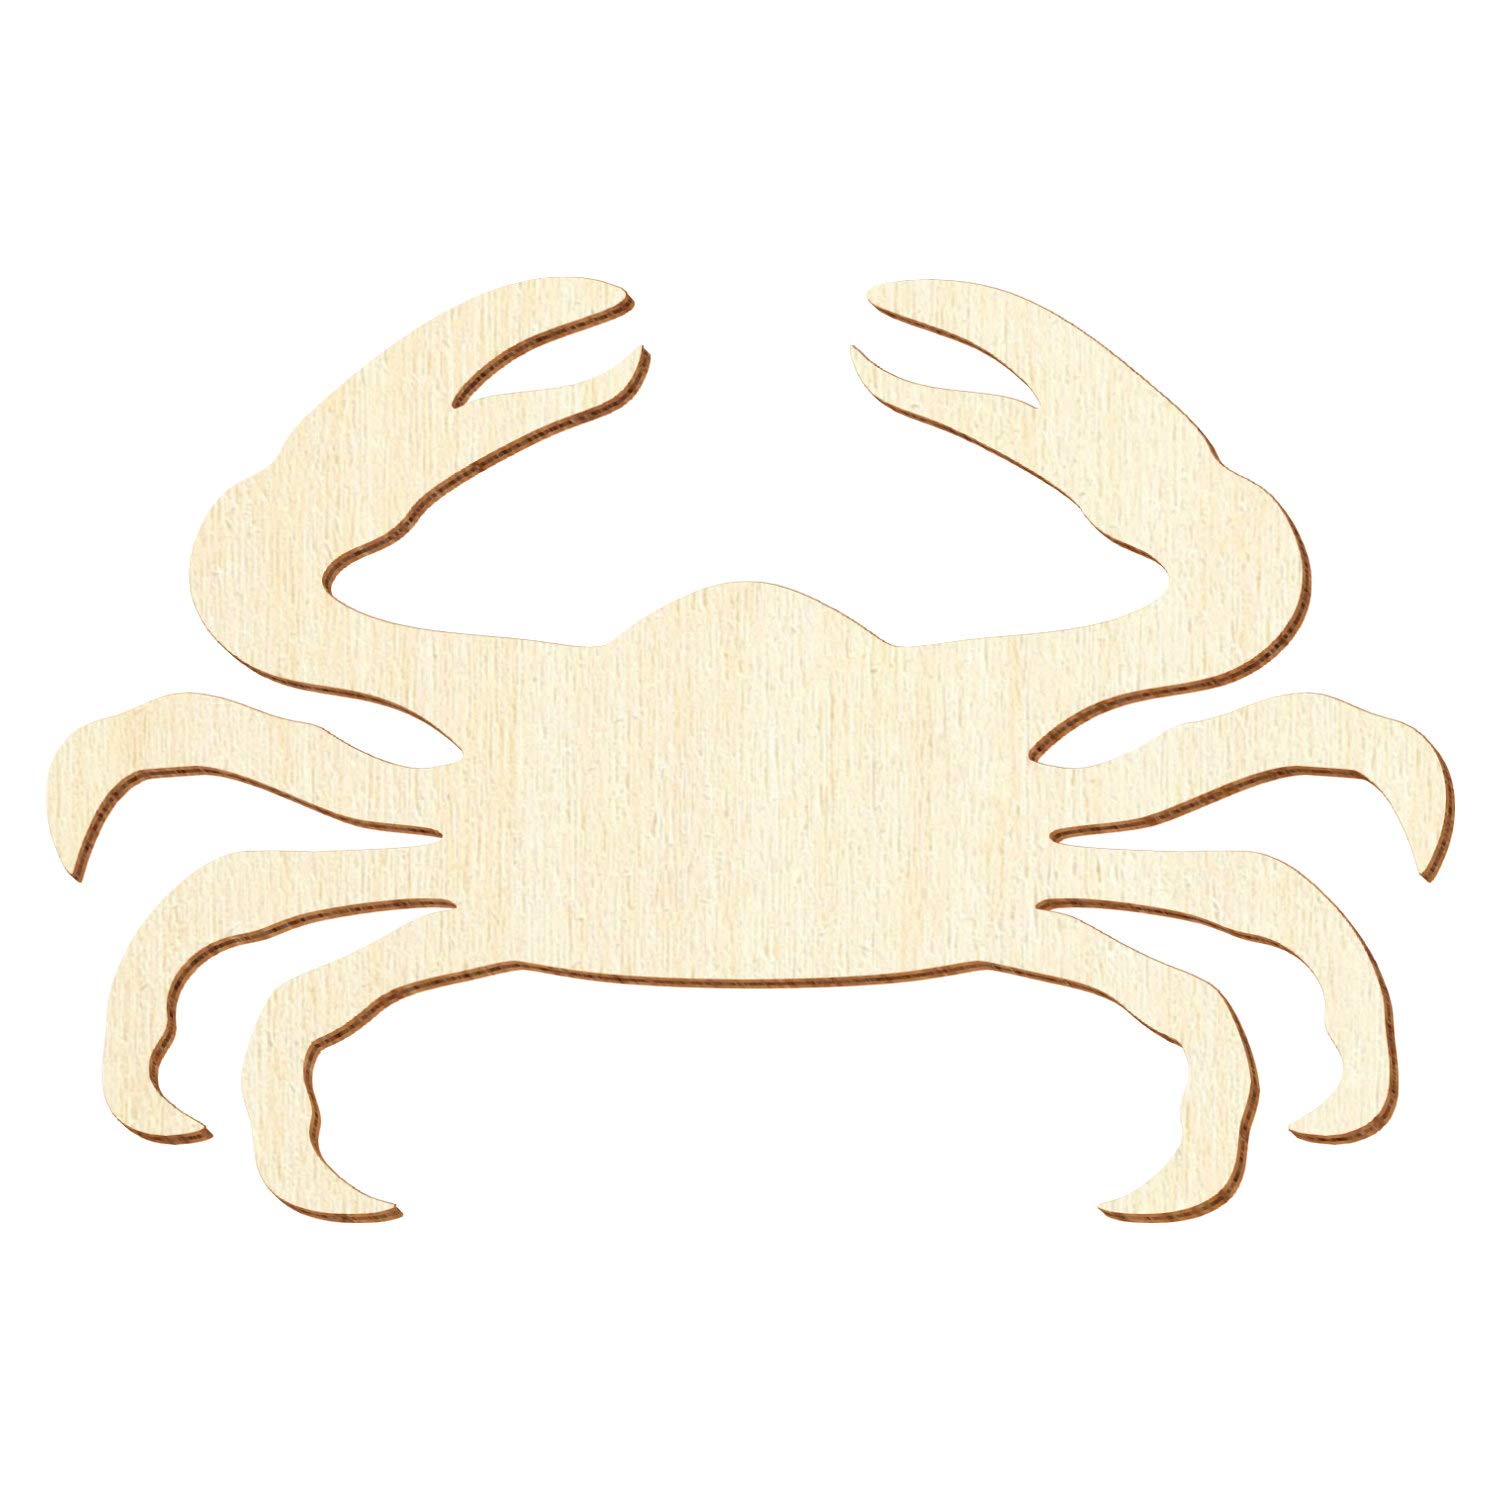 Holz Krabbe - Deko Basteln 5-50cm, Größe:10cm, Pack mit:25 Stück